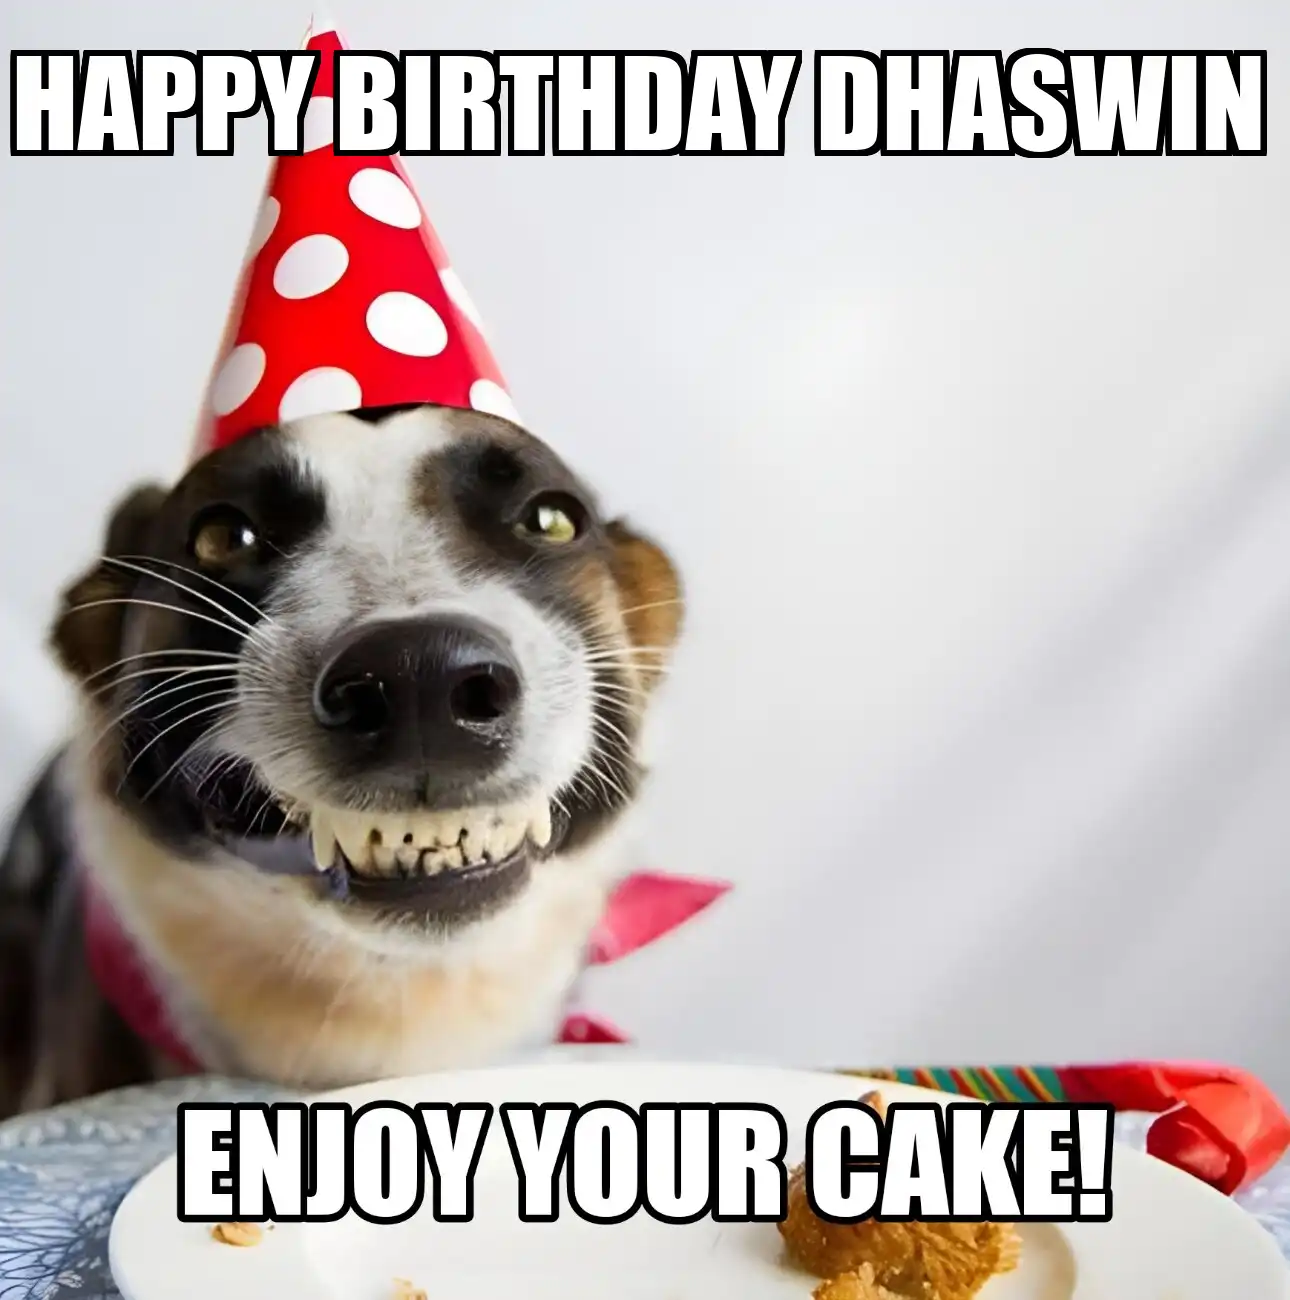 Happy Birthday Dhaswin Enjoy Your Cake Dog Meme